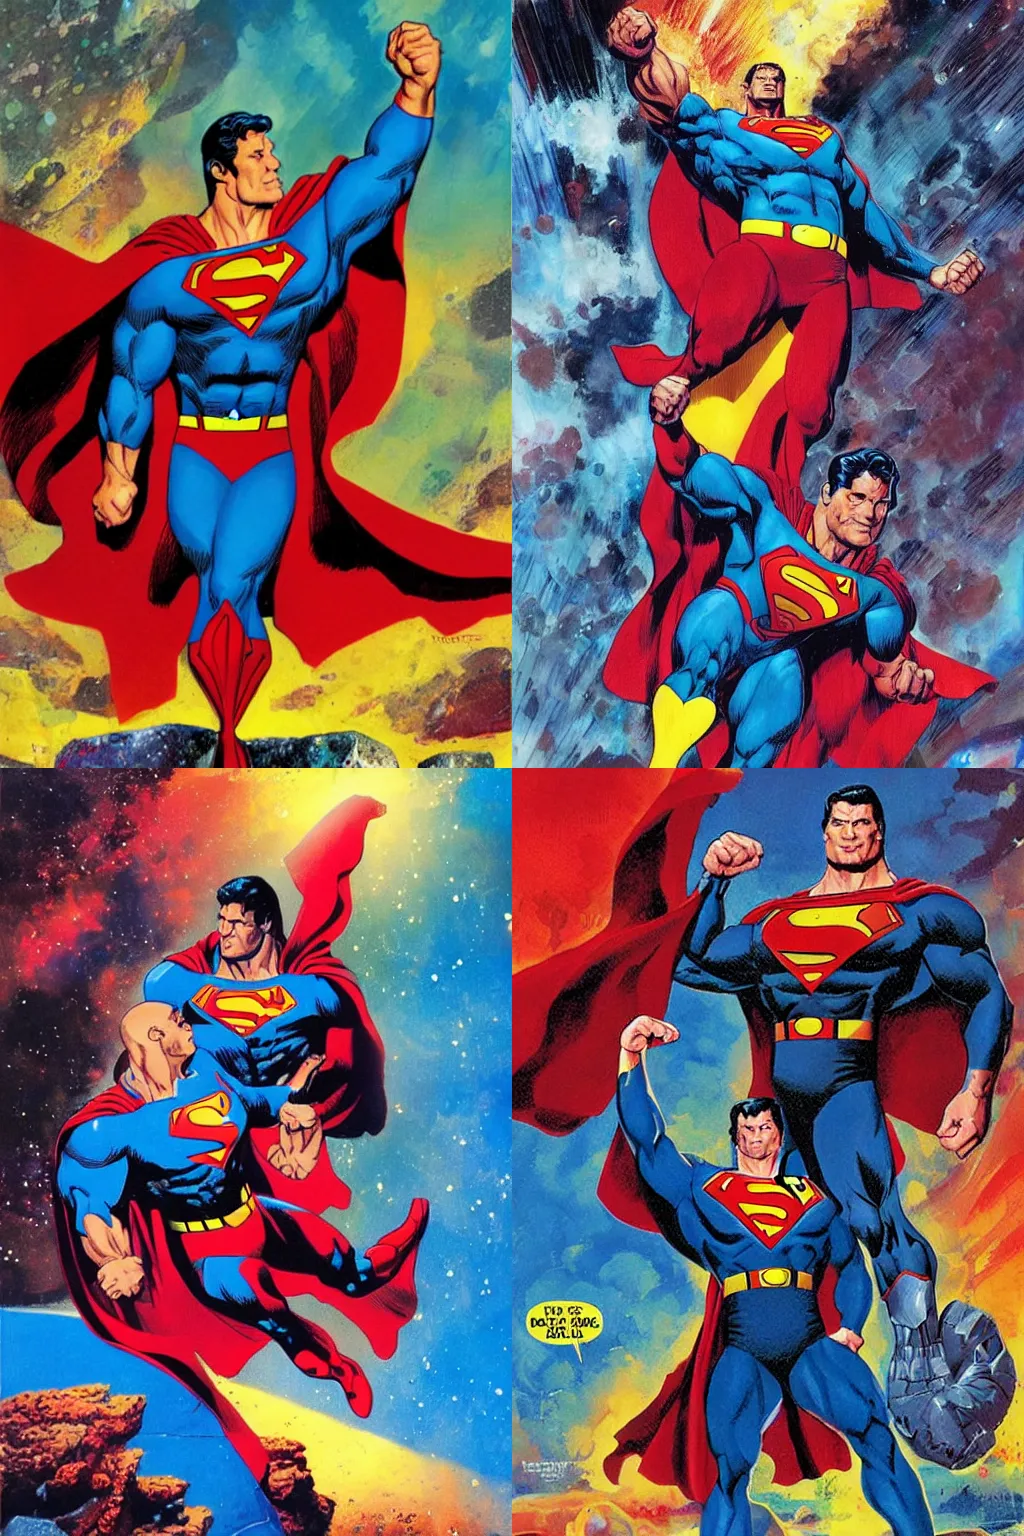 Prompt: Dwayne Johnson as Superman by Paul Lehr and Arthur Adams